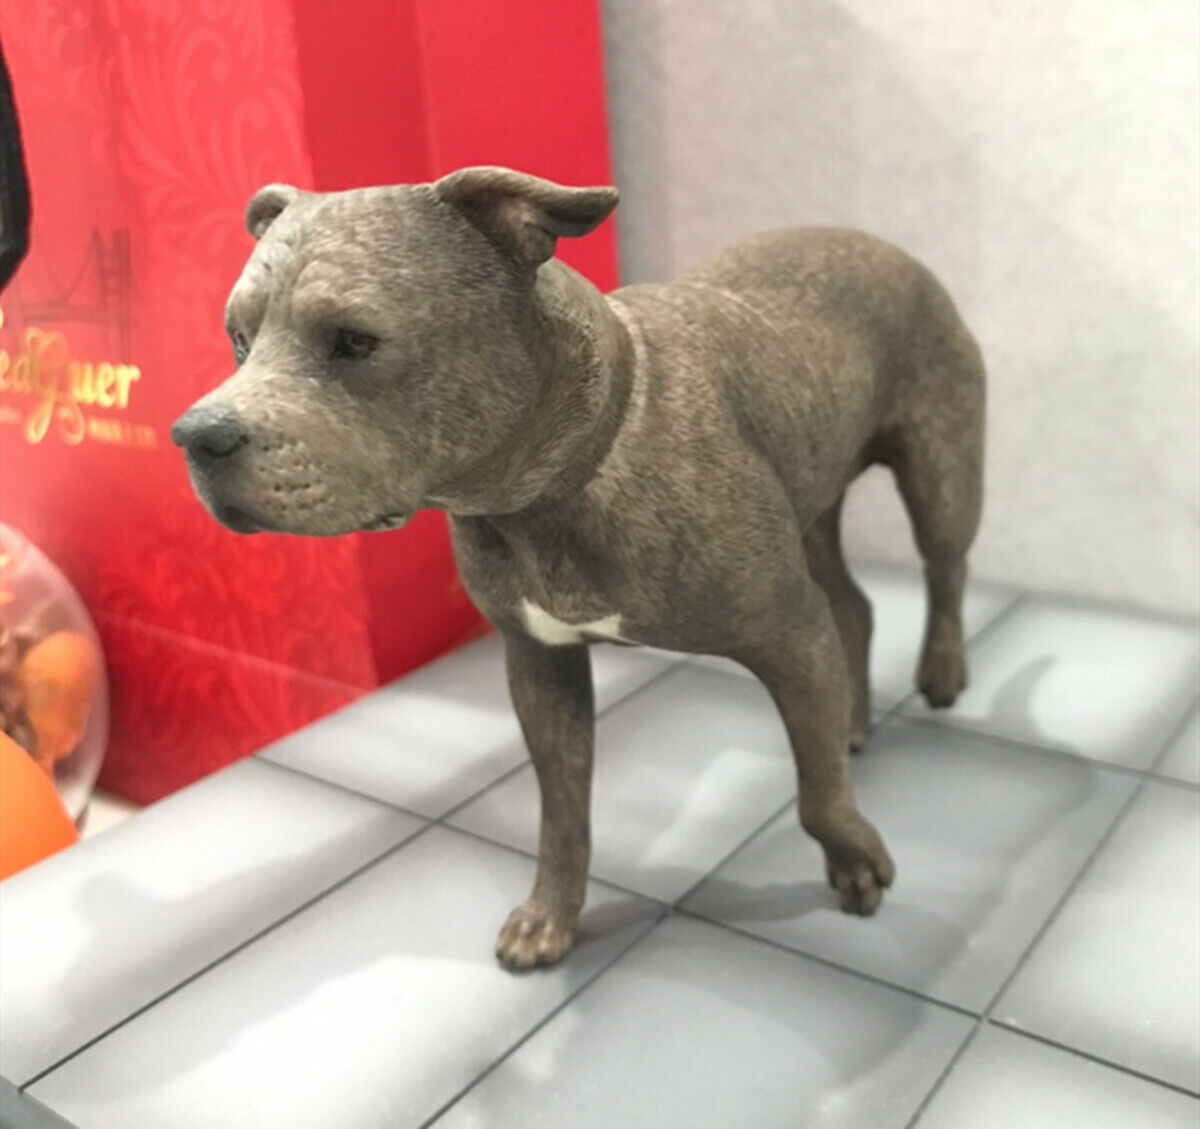 Pedido Figura Perro Terrier (2 variantes) marca Mr. Z escala 1/6